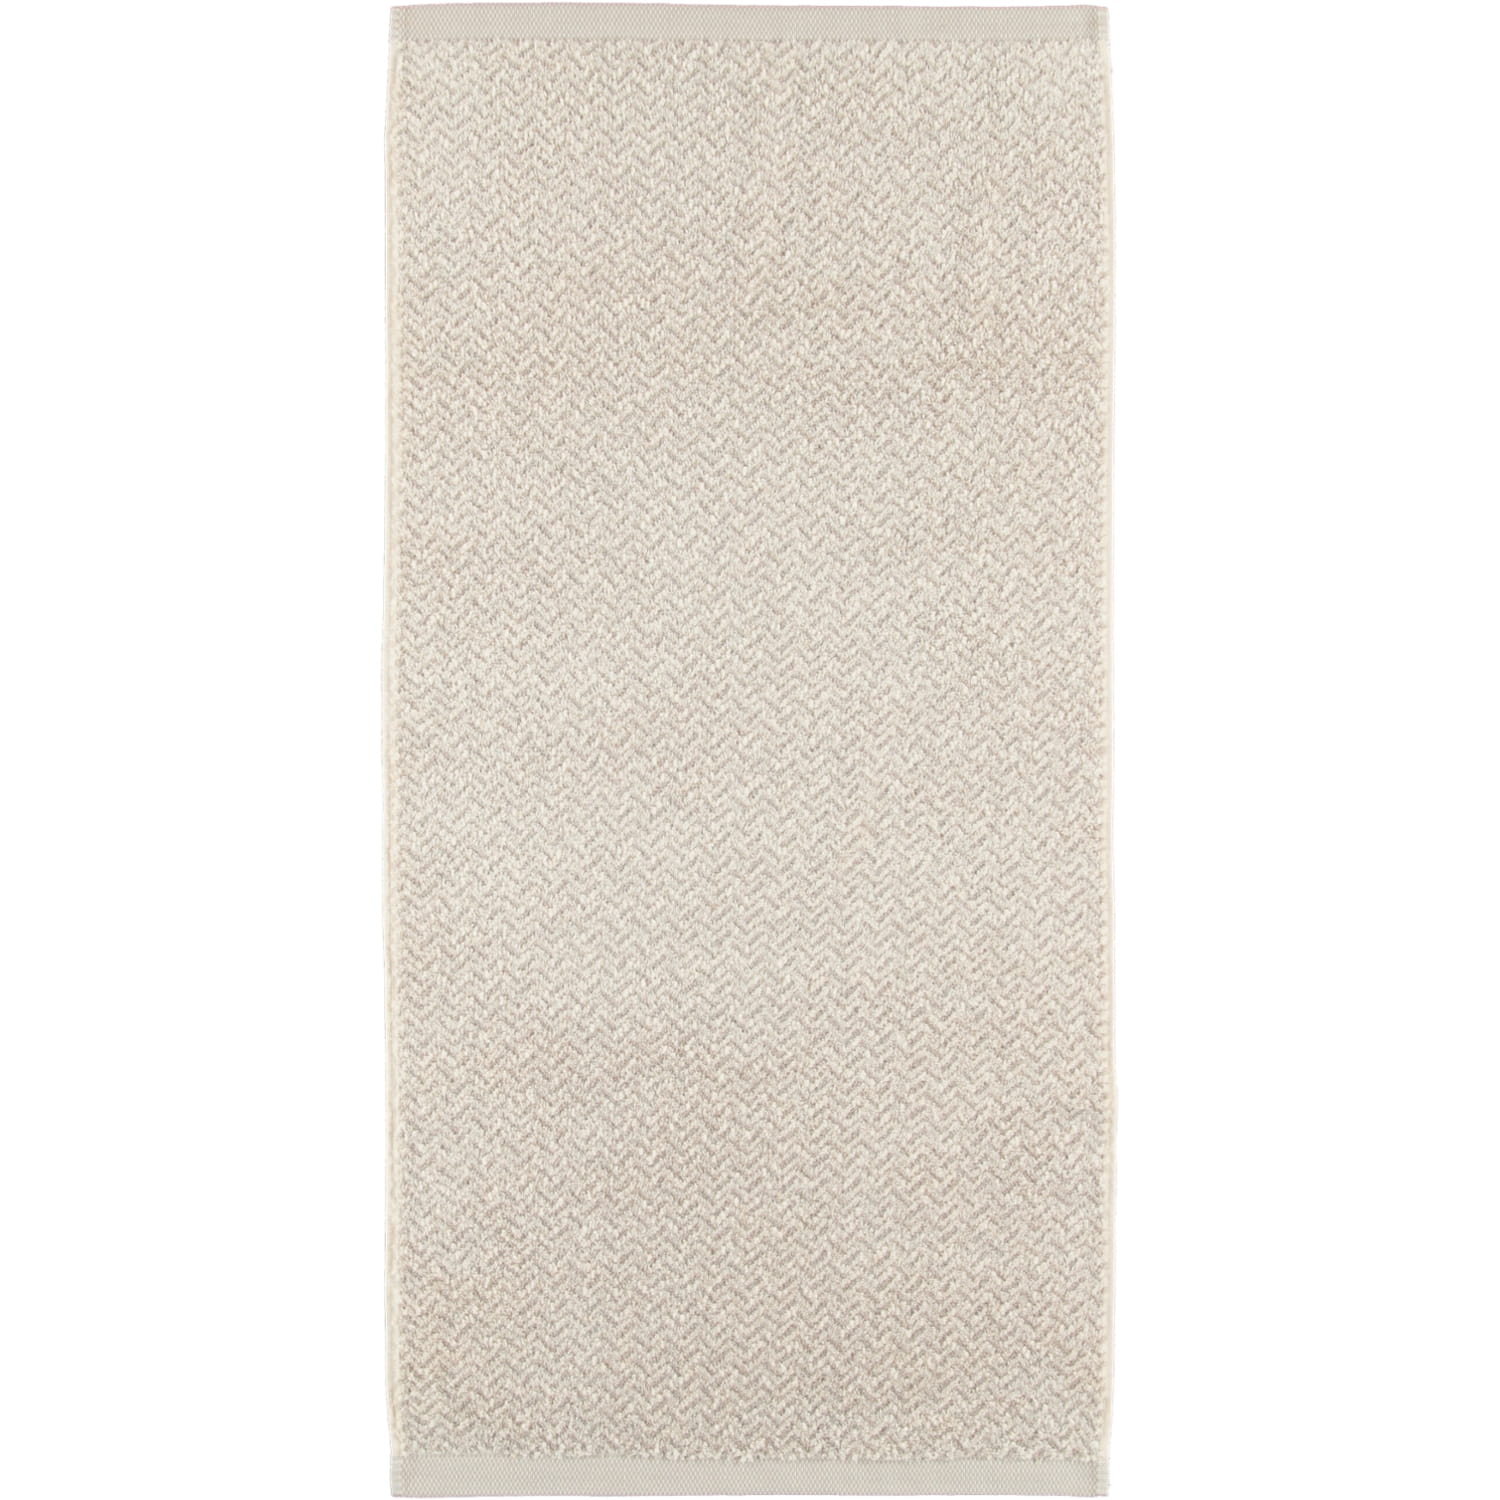 Möve - Brooklyn Fischgrat - Farbe: nature/cashmere - 071 (1-0567/8970) -  Handtuch 50x100 cm | Handtuch | Handtücher